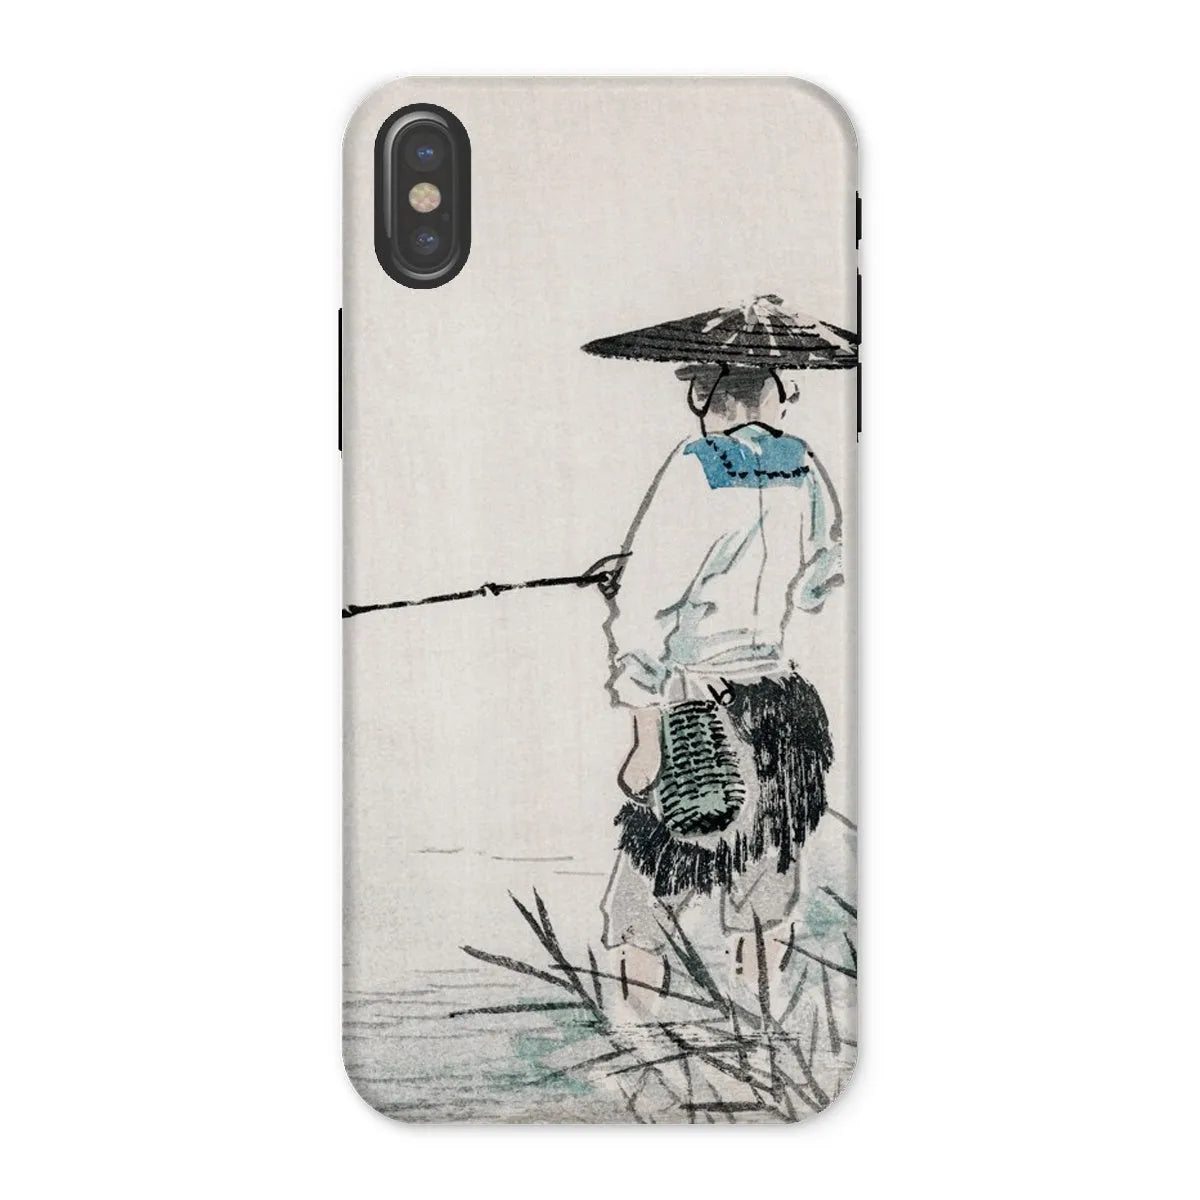 Japanese Fisherman Aesthetic Art Phone Case - Kōno Bairei - Iphone x / Matte - Mobile Phone Cases - Aesthetic Art